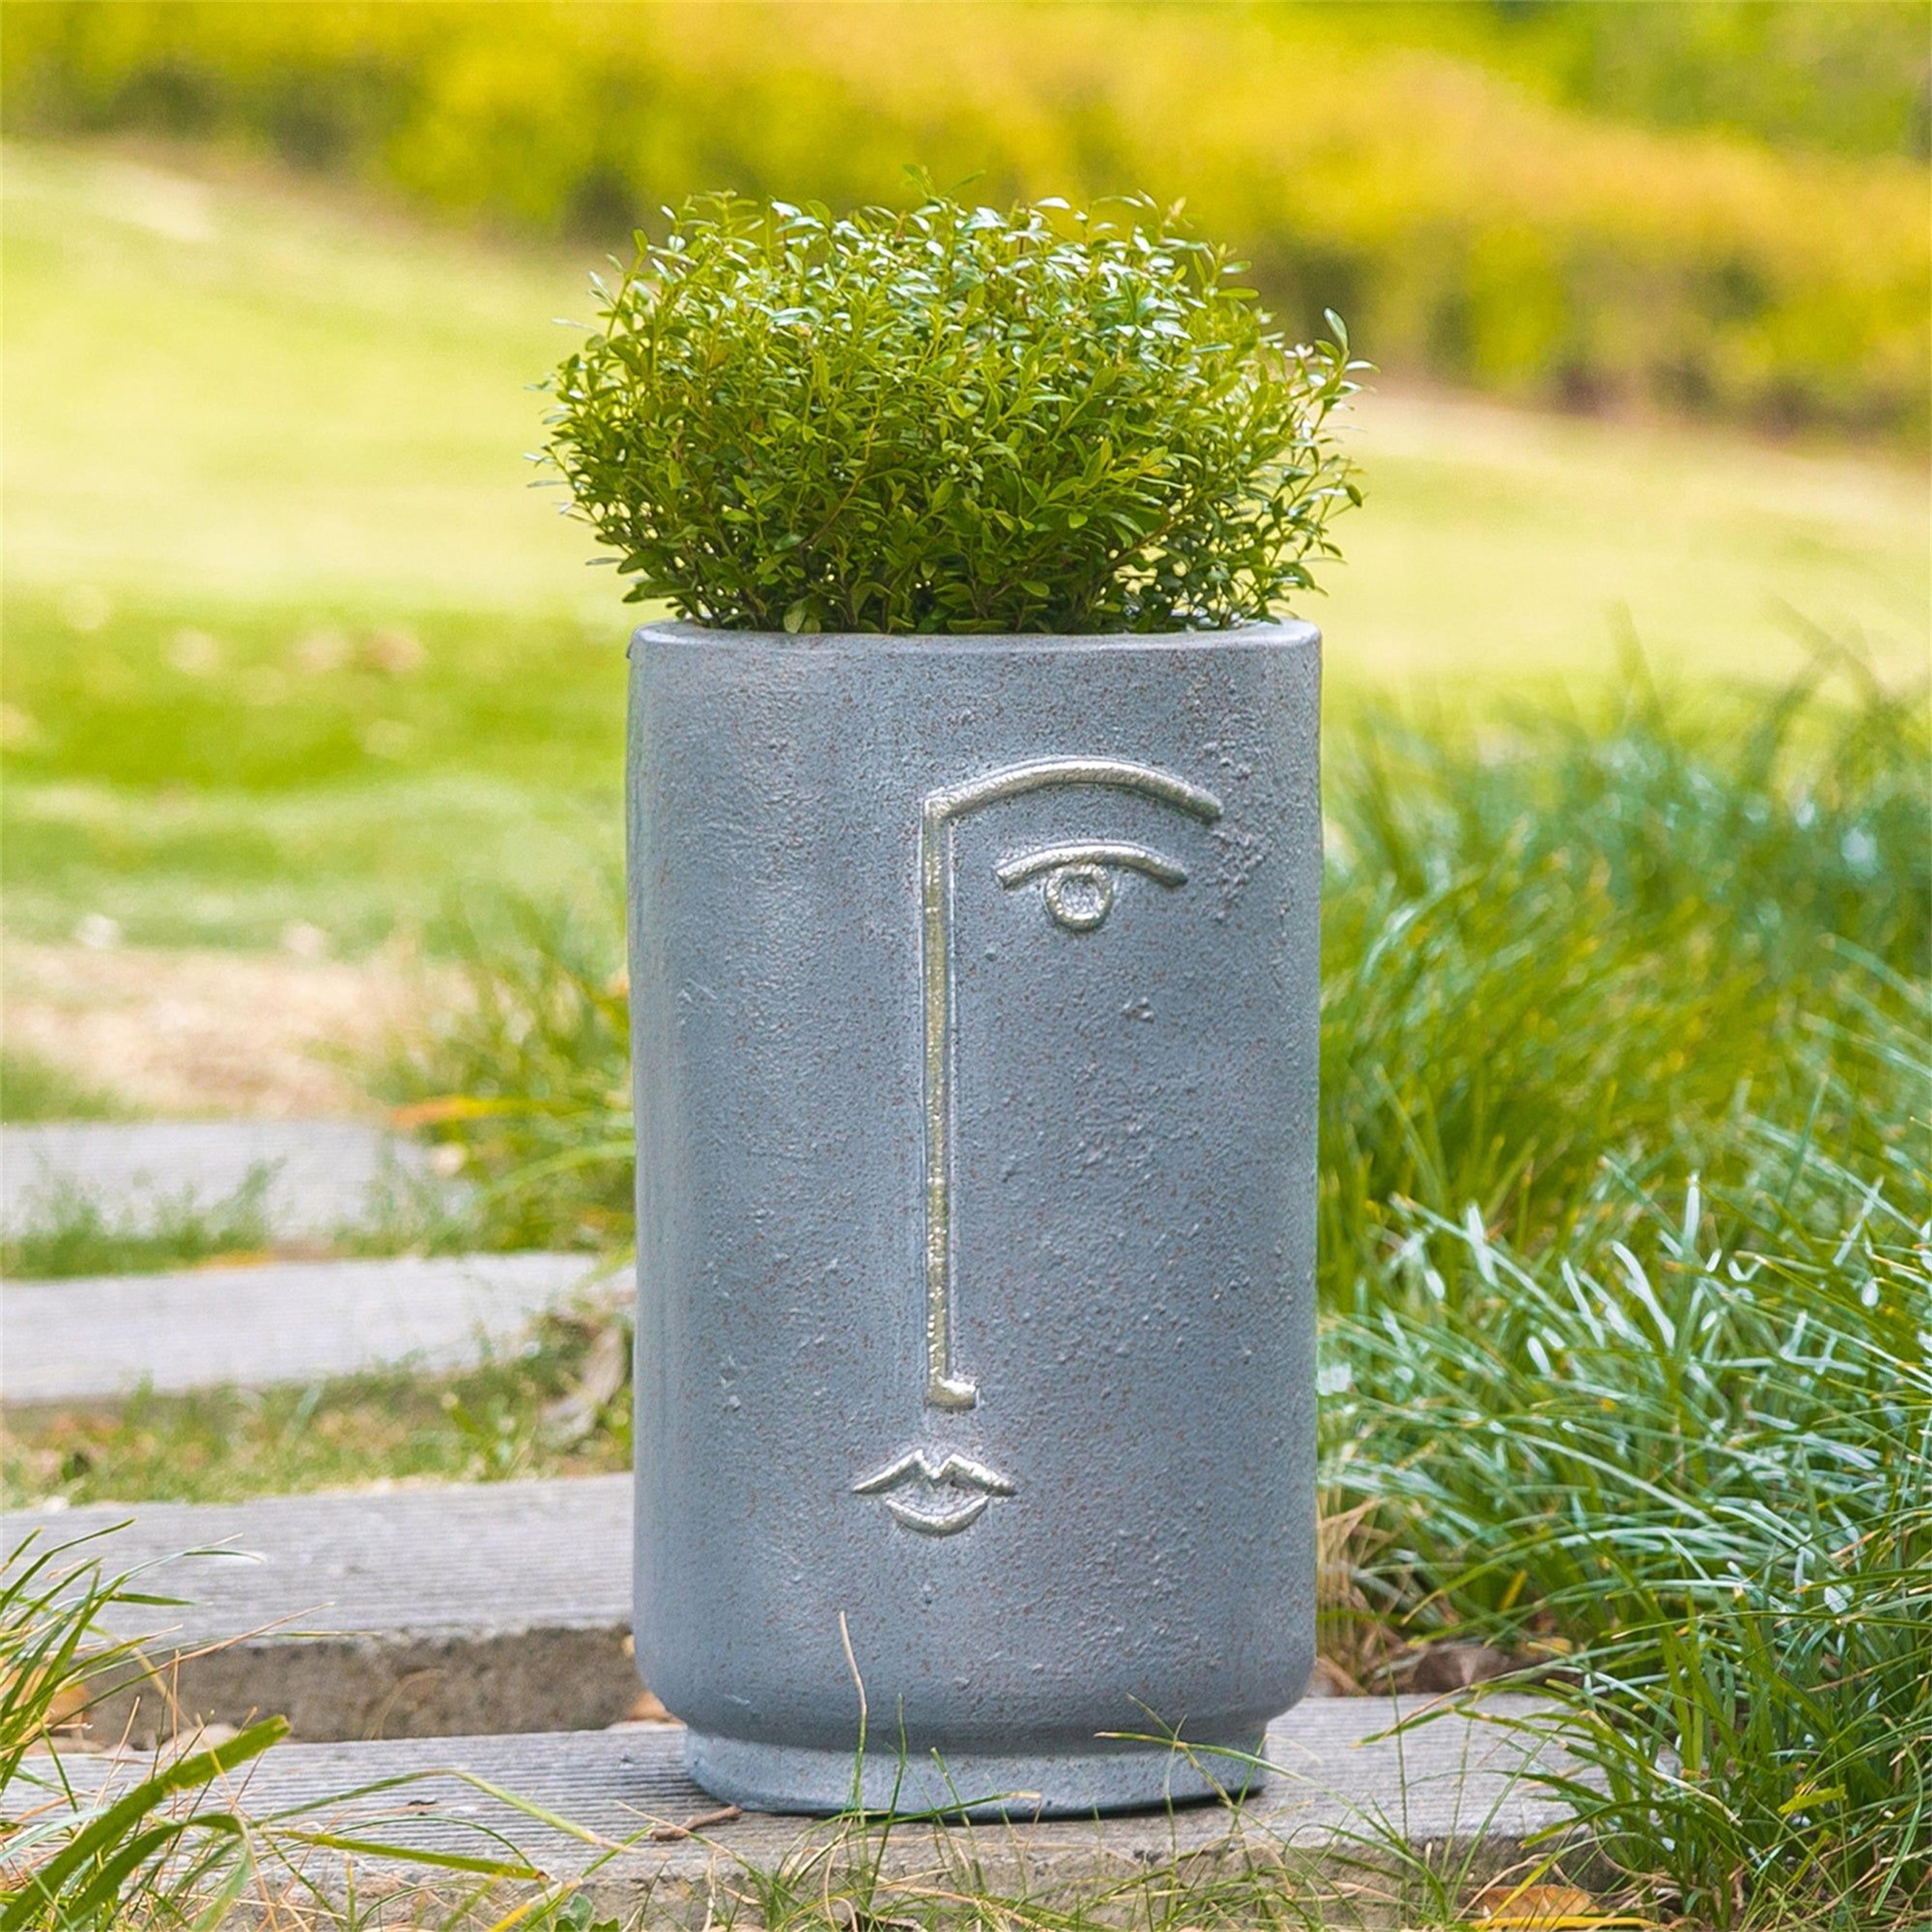 Adeco Flower Pots Face Head Planter for Outdoor Indoor